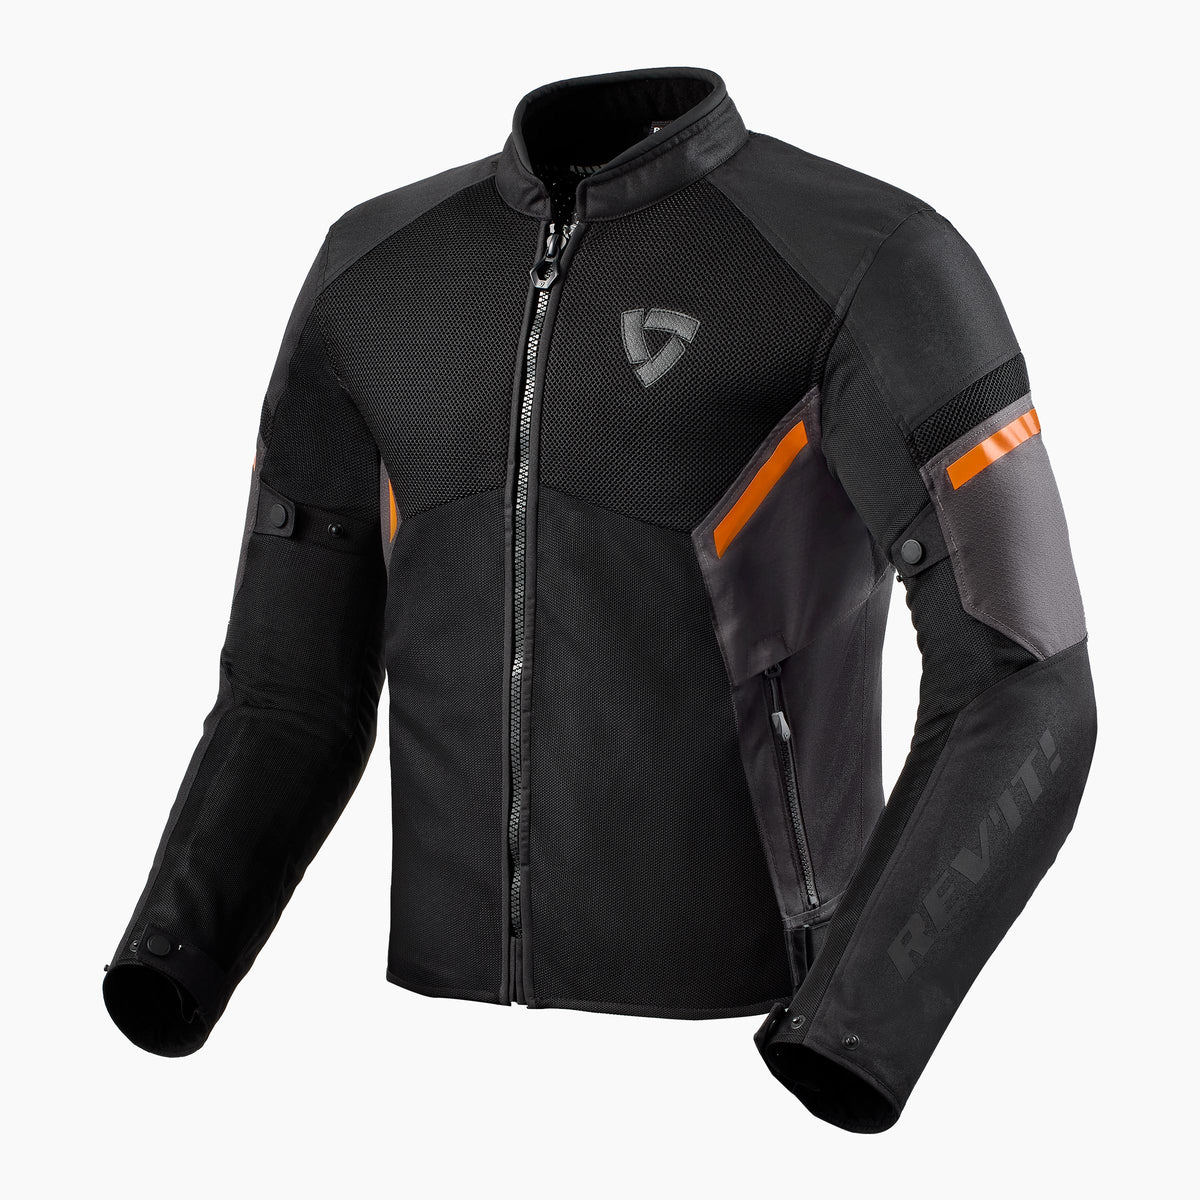 RevIt GT-R Air 3 Jacket Black/Neon Orange